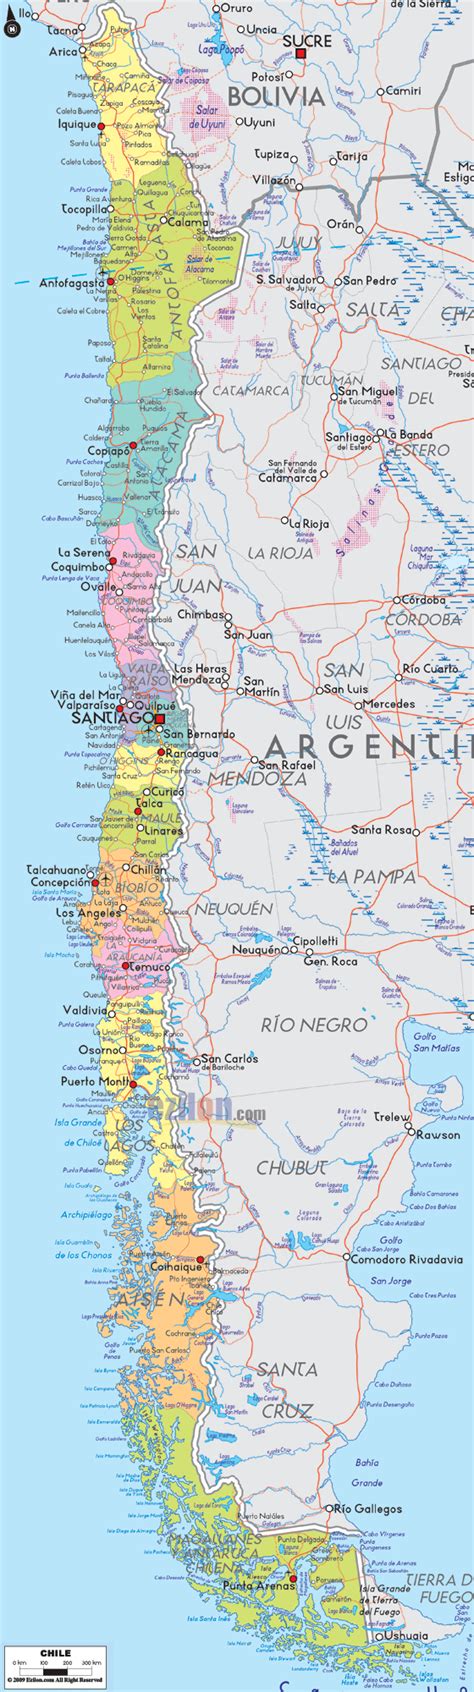 Google Image Result For Https Ezilon Maps Images Southamerica